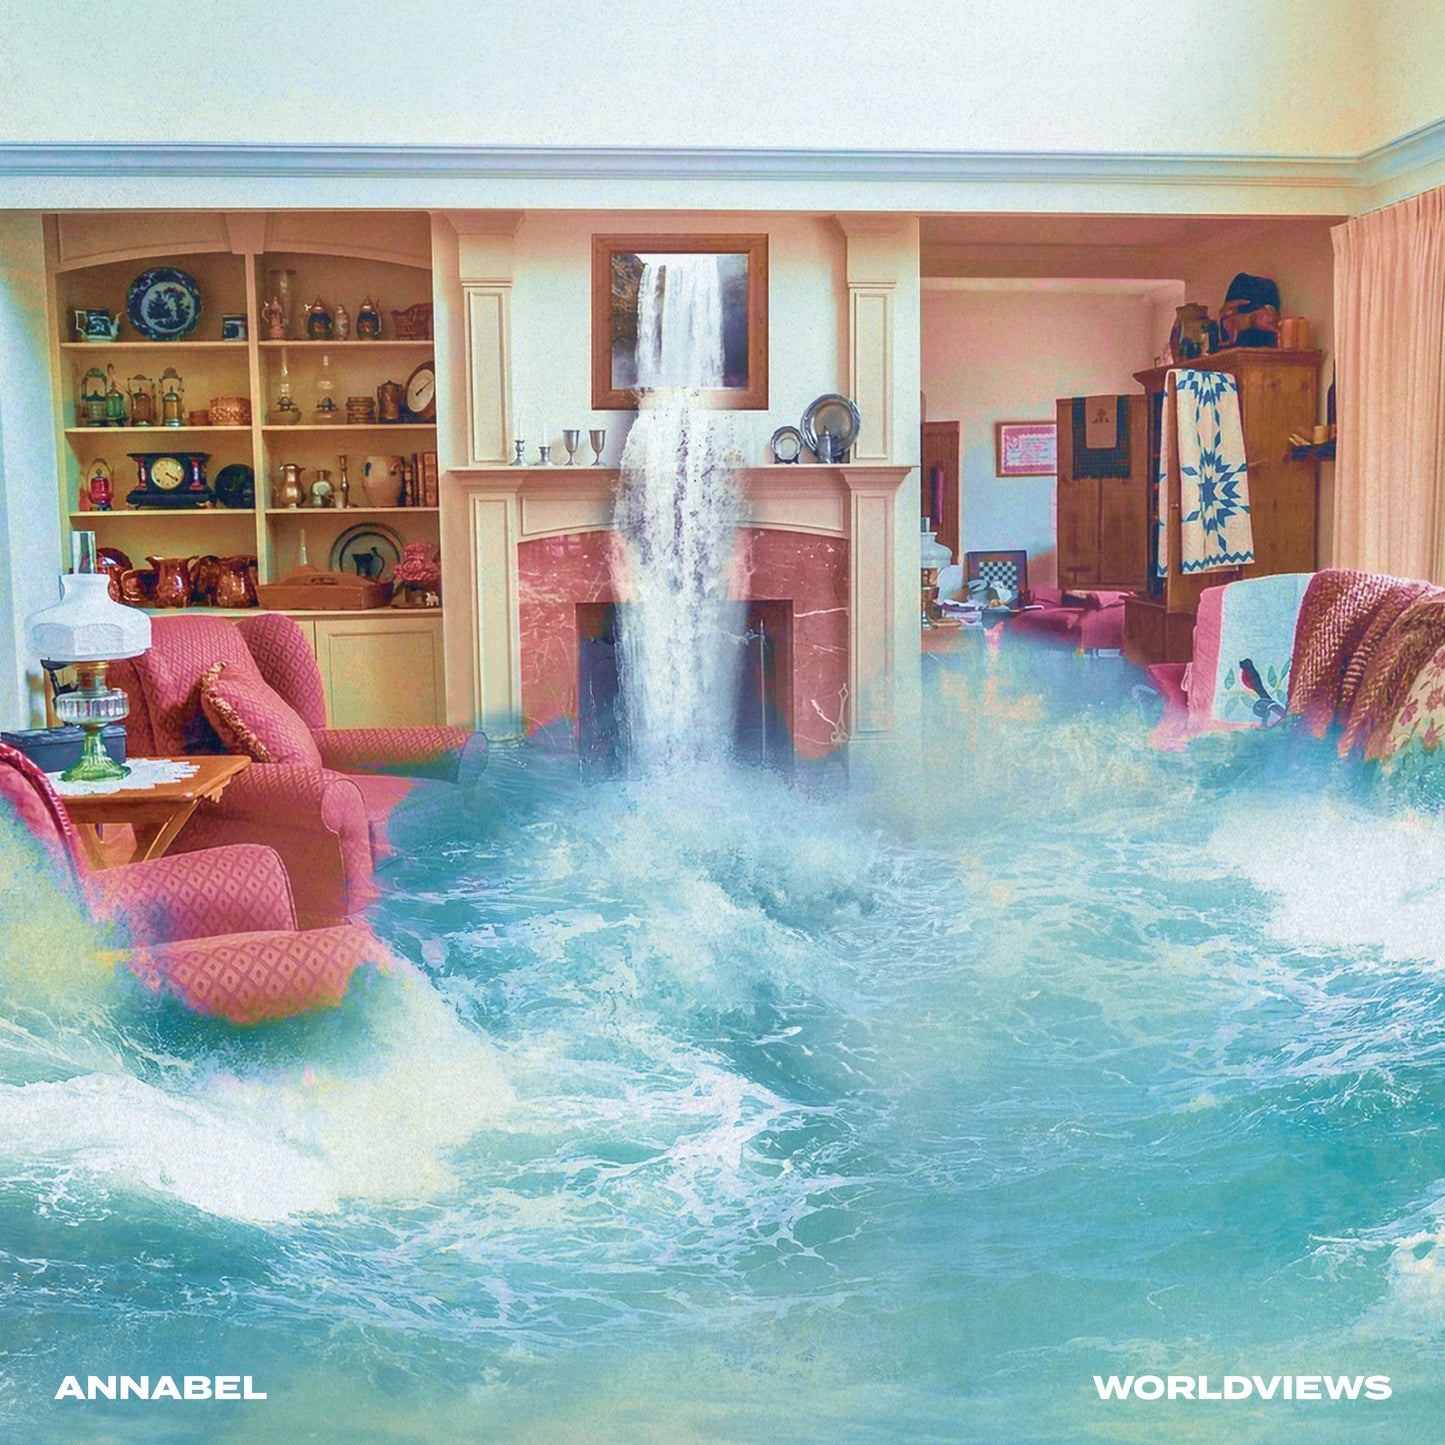 Annabel "Worldviews" LP